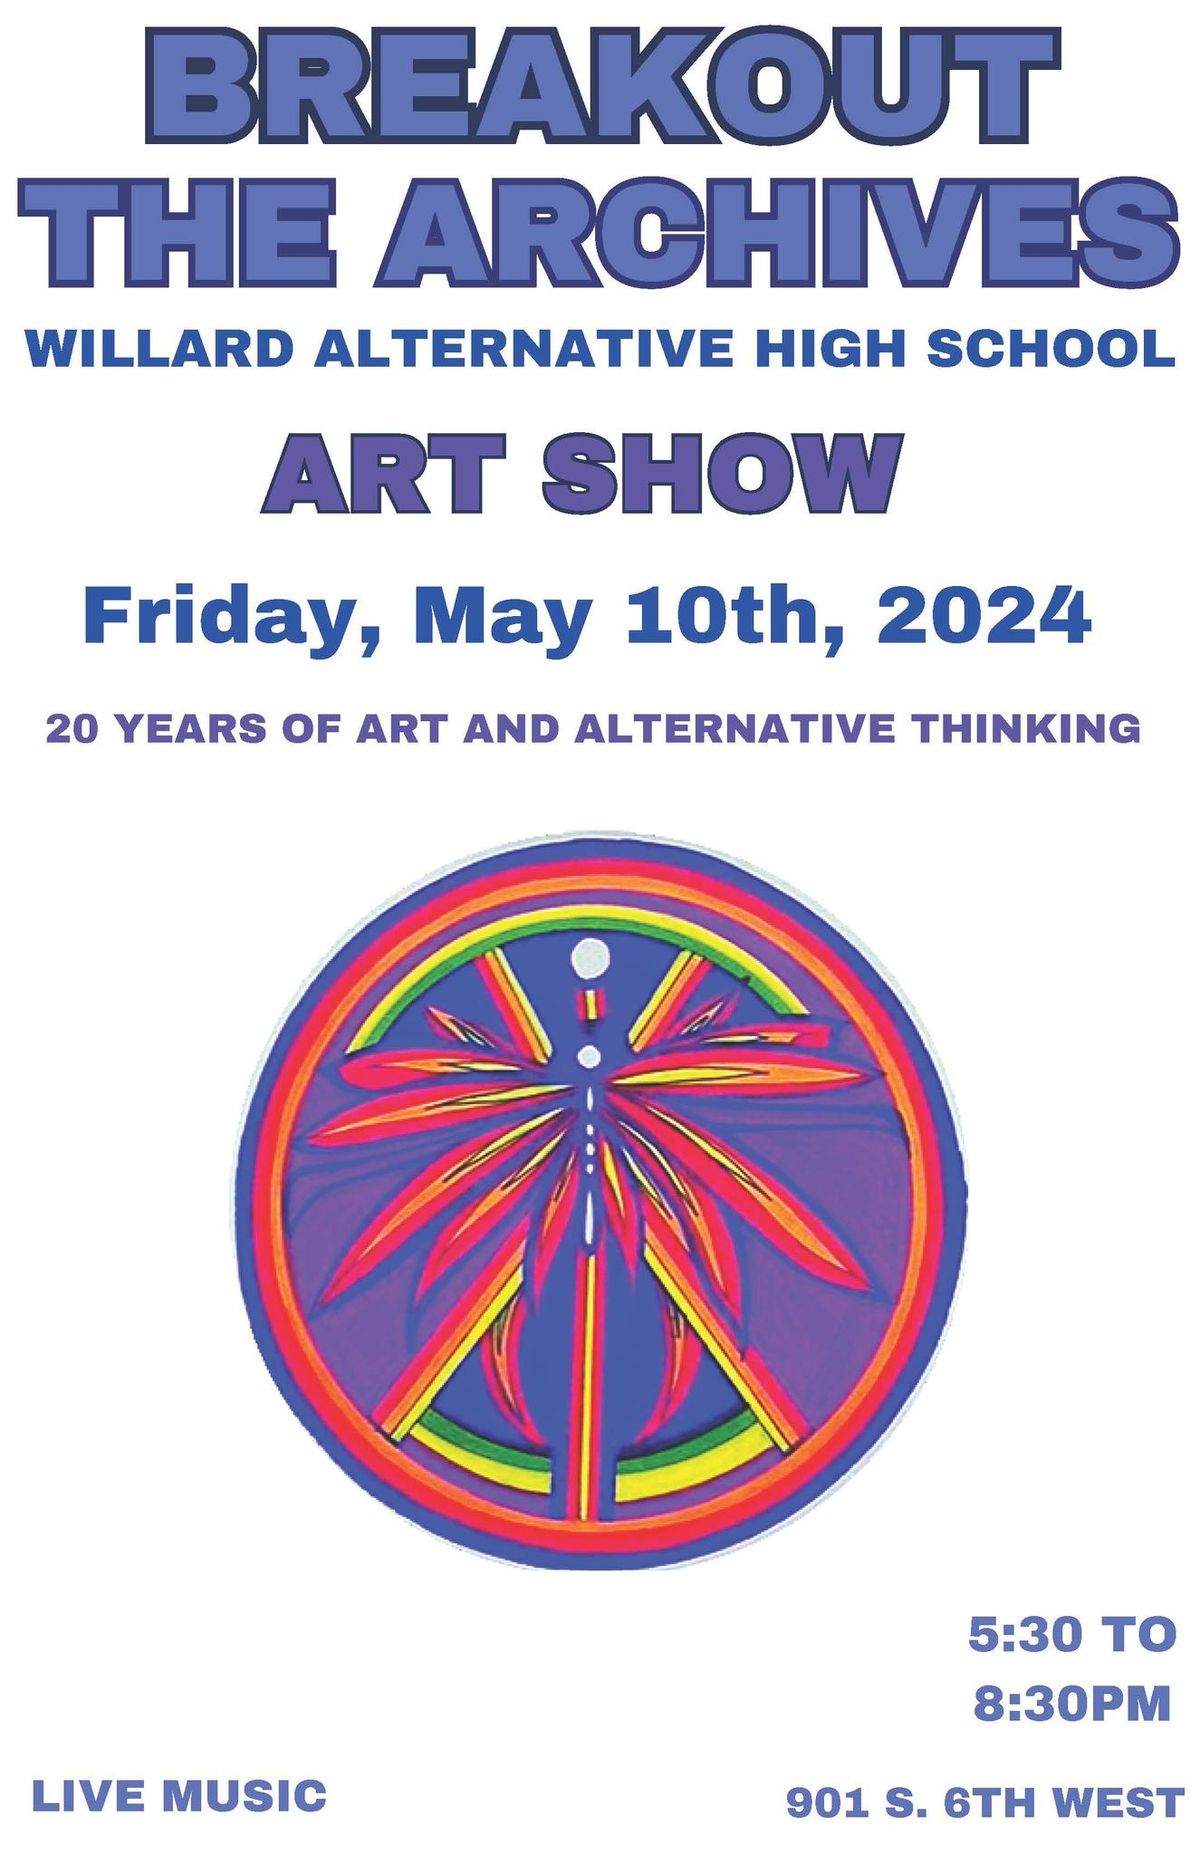 Willard Art Show: "Breakout the Archives" 